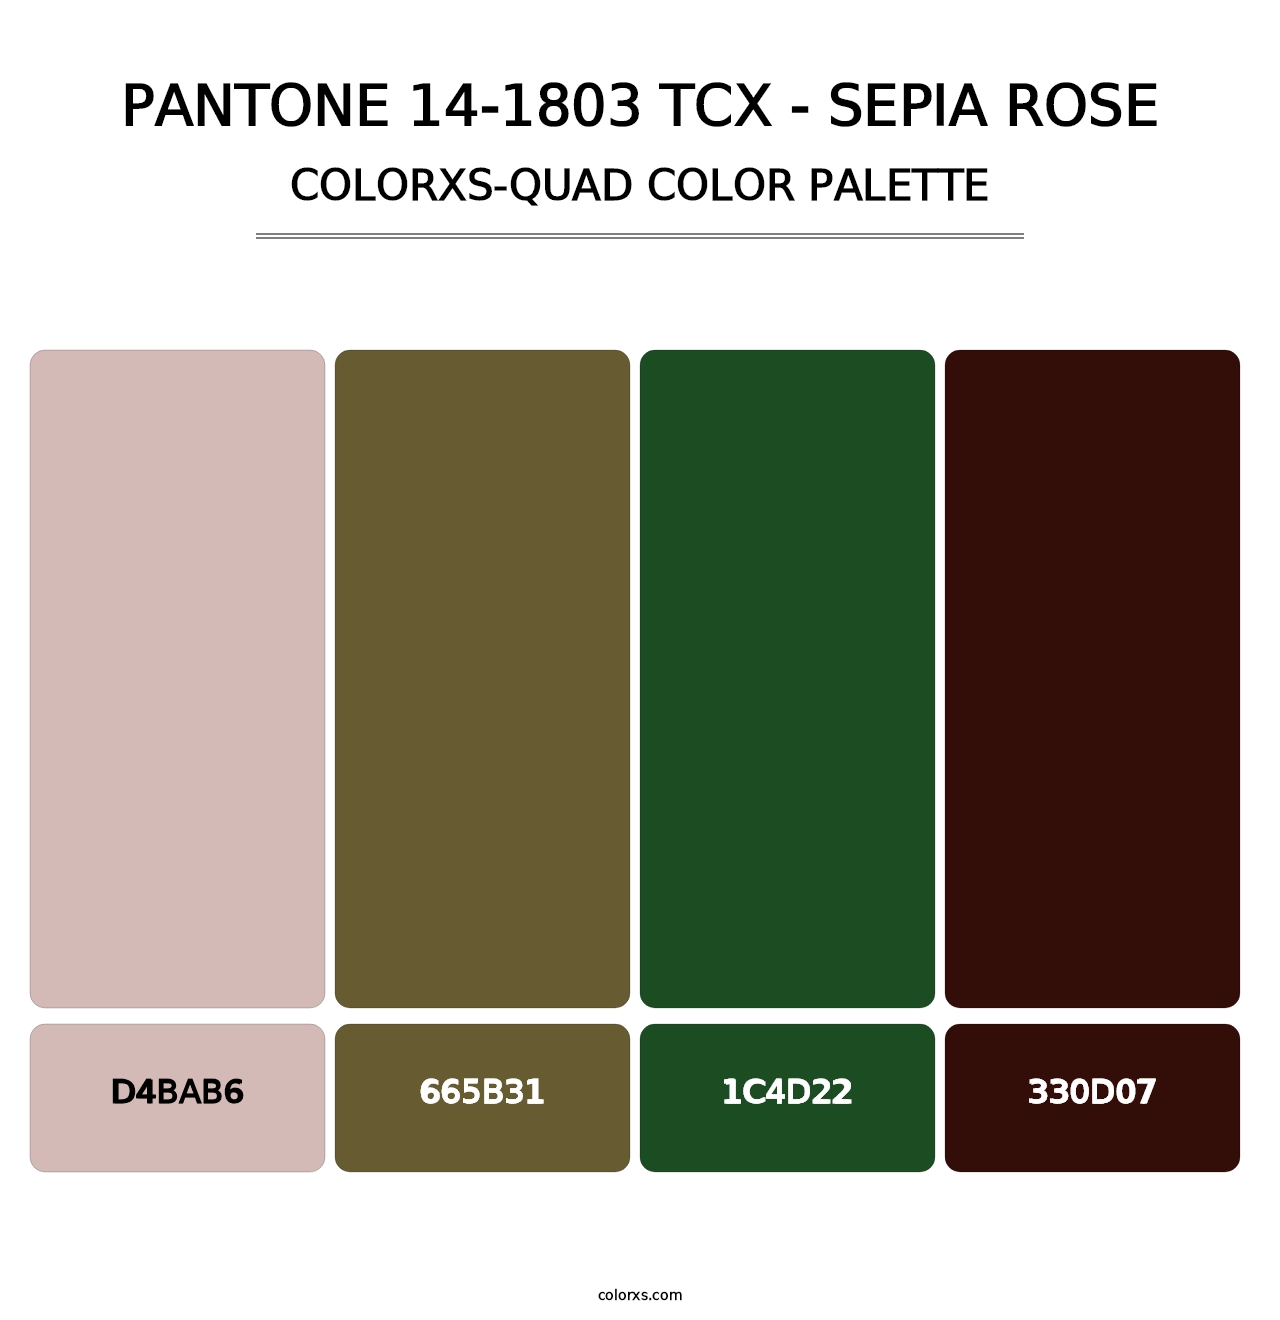 PANTONE 14-1803 TCX - Sepia Rose - Colorxs Quad Palette